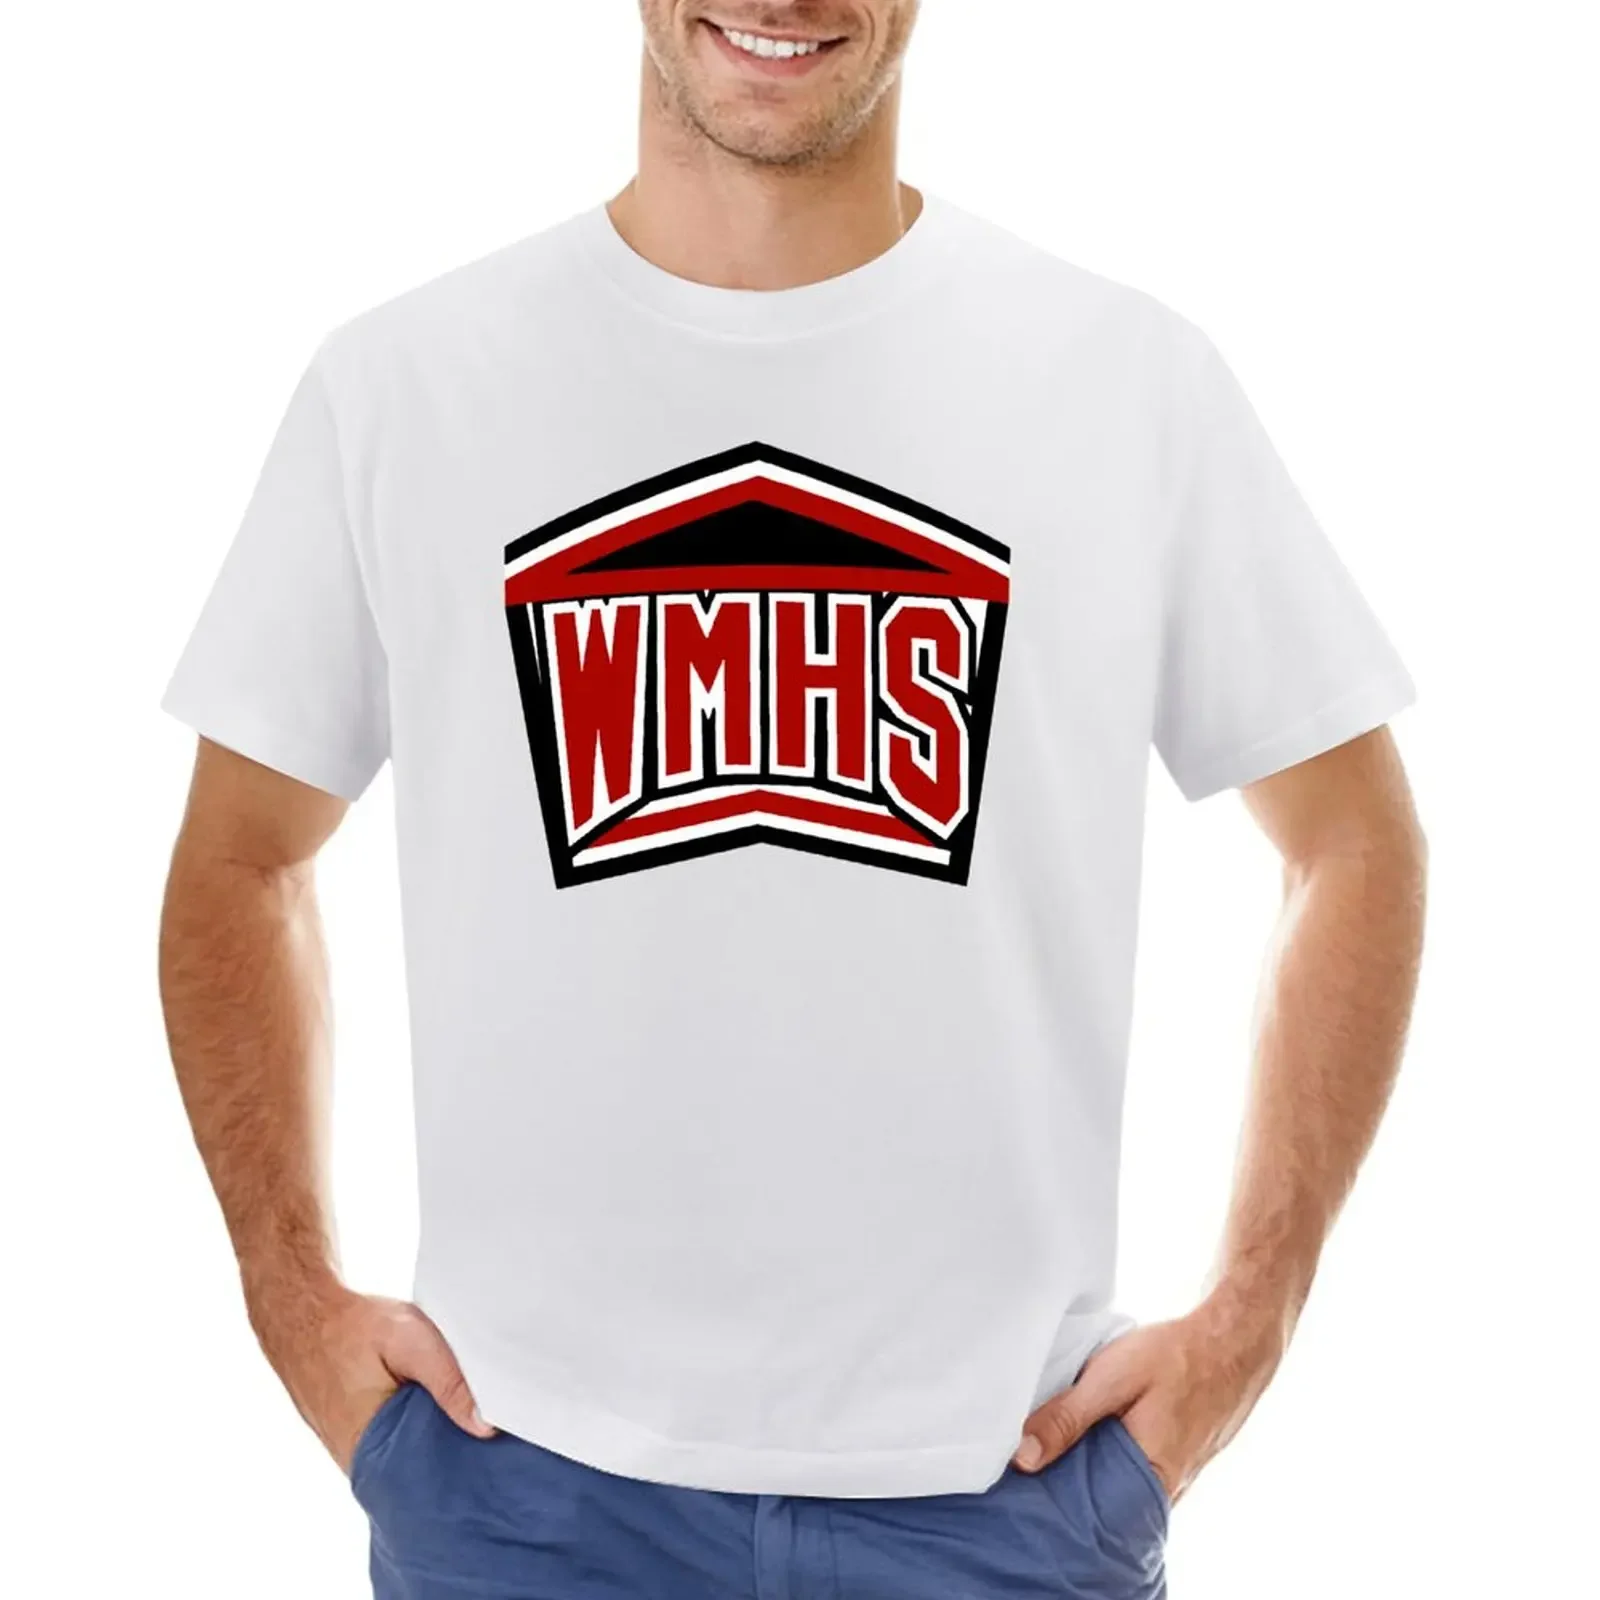 

WMHS Cheerios Logo T-shirt quick drying blacks aesthetic clothes mens tall t shirts